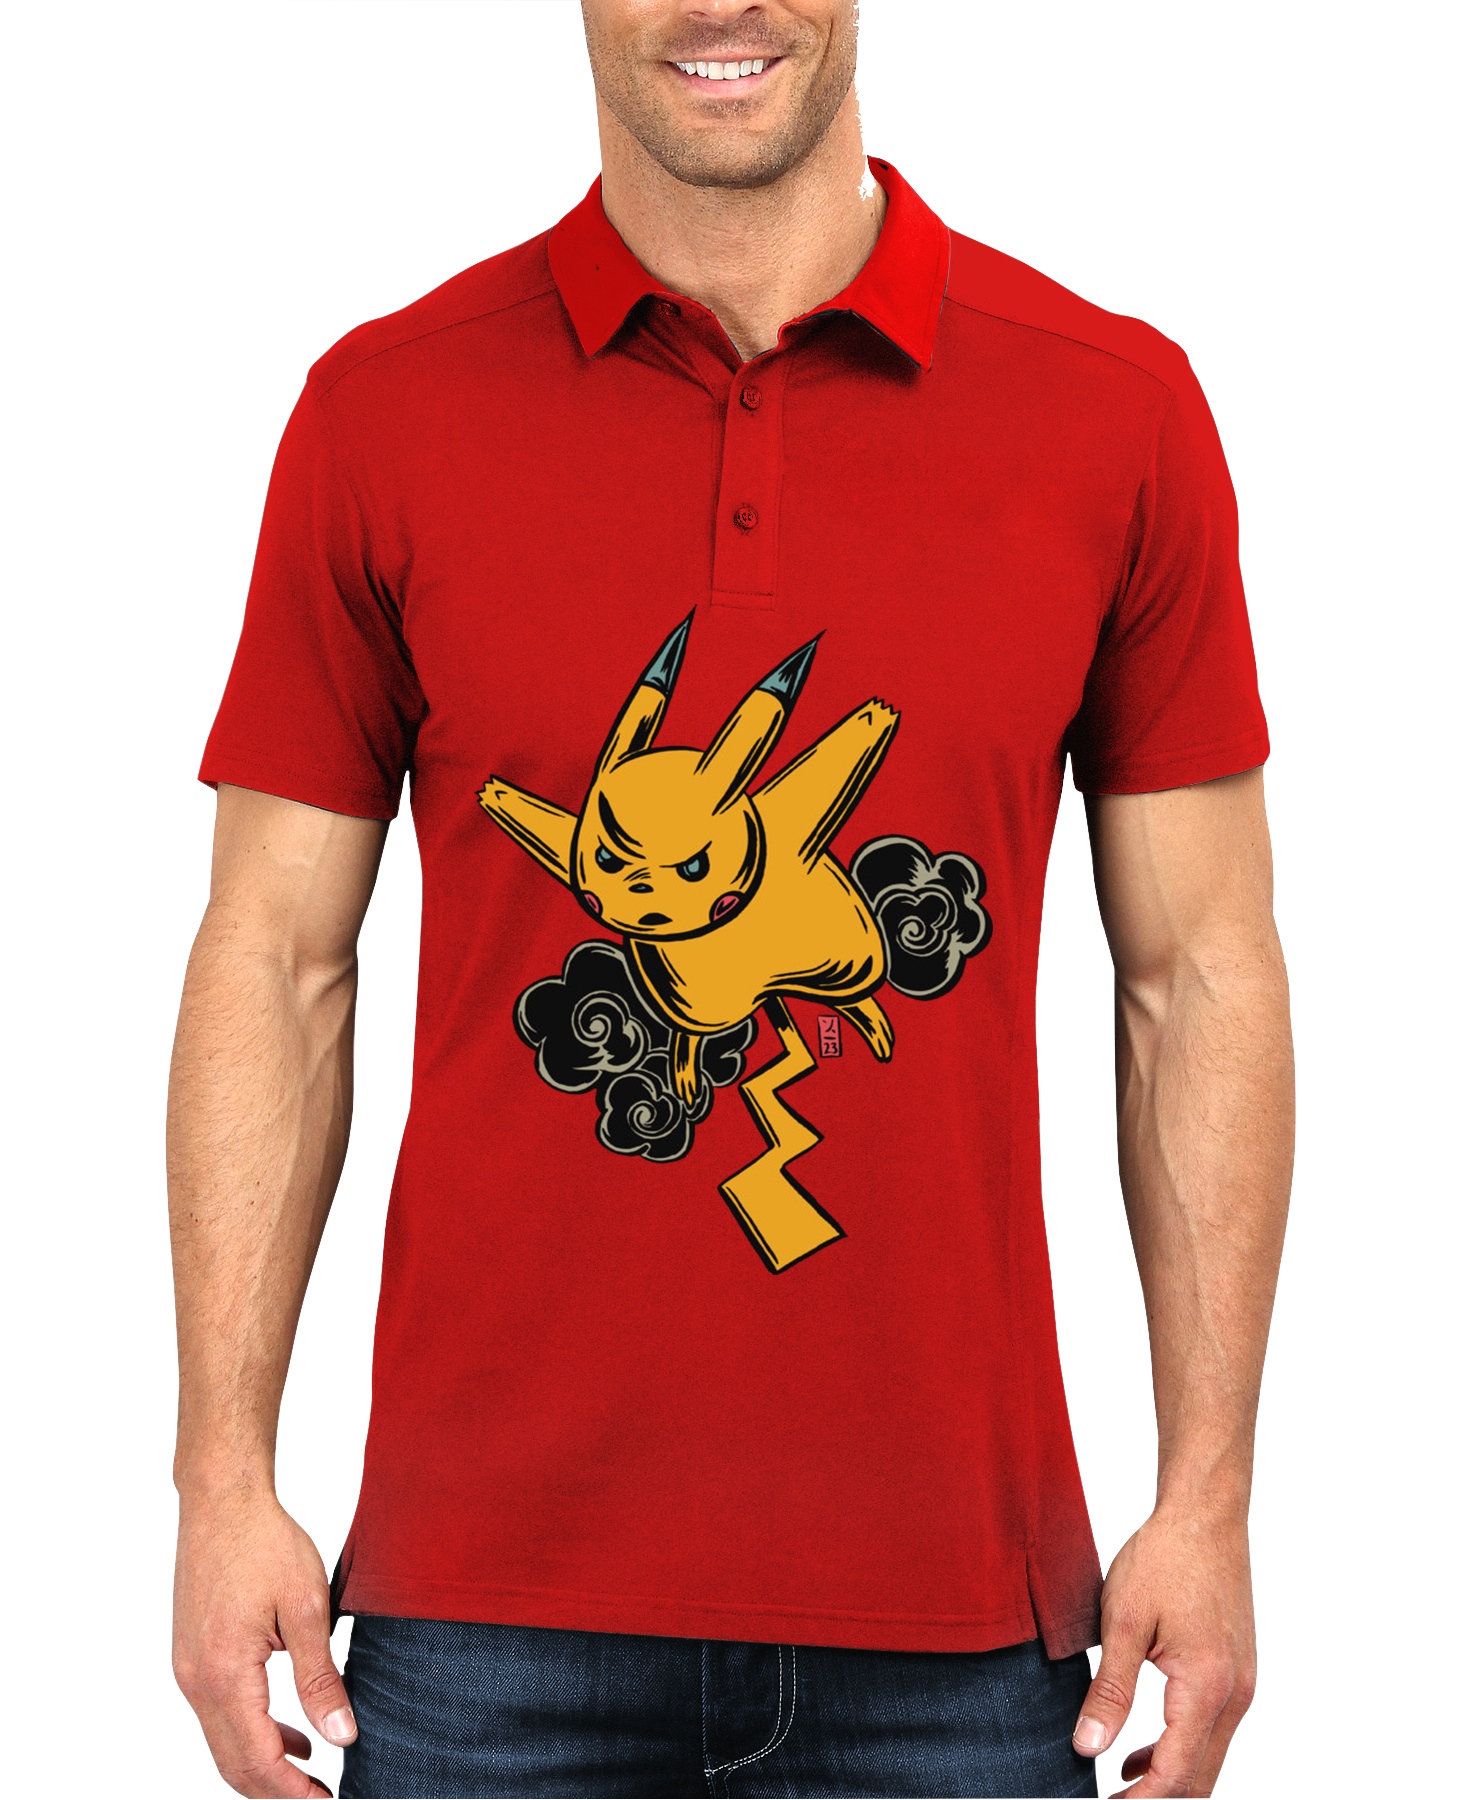 Thunderbolt Pikachu Red Polo Tee - Supreme Shirts